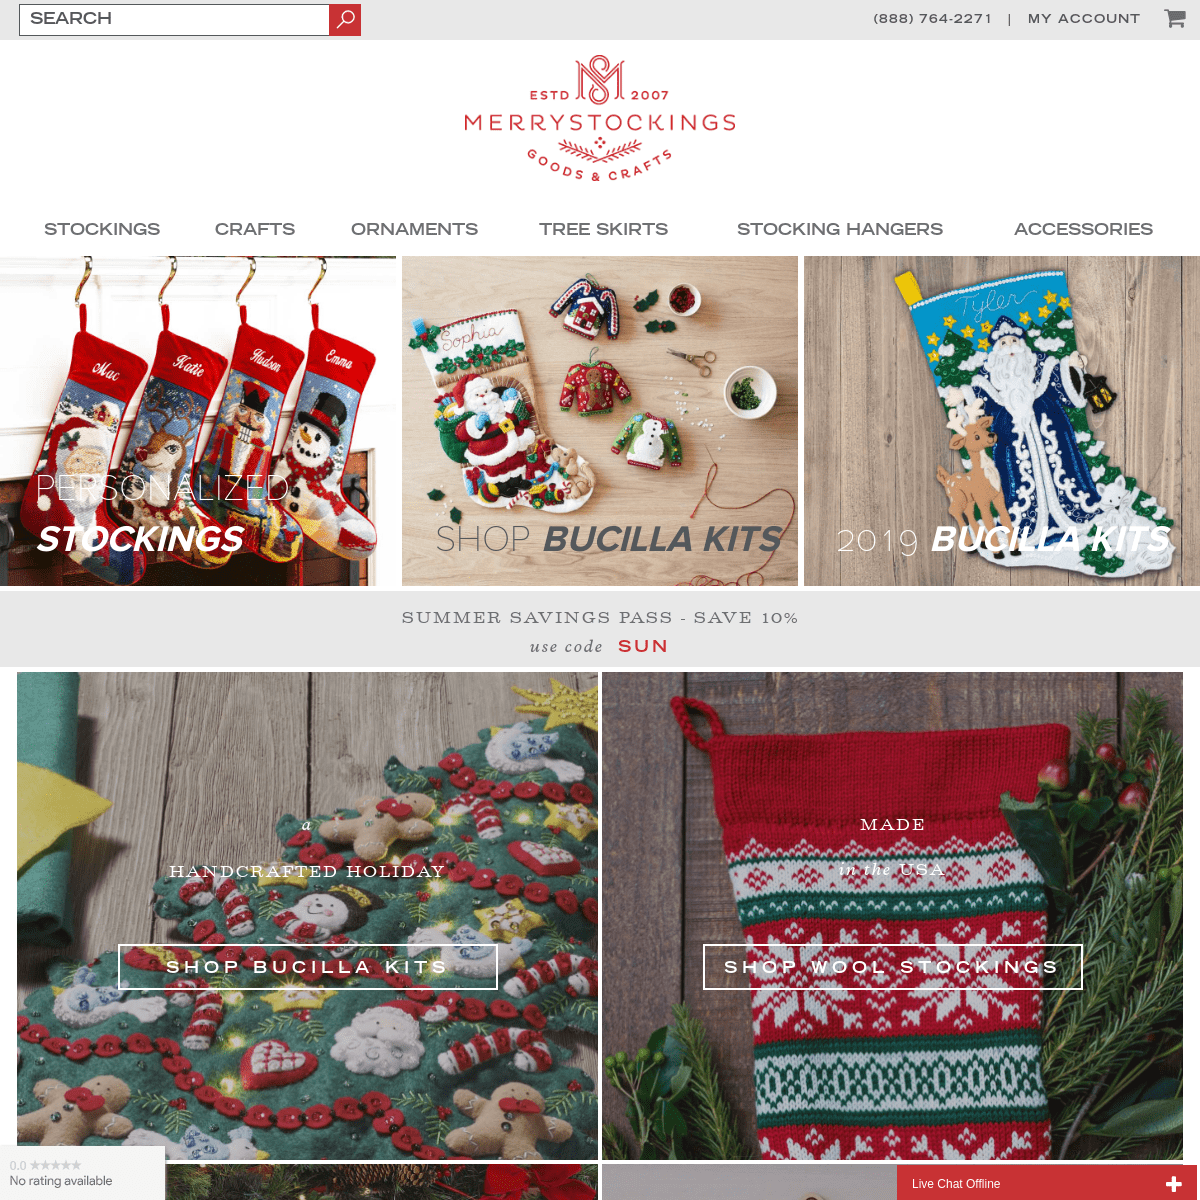 Personalized Christmas Stockings & Bucilla Kits | MerryStockings